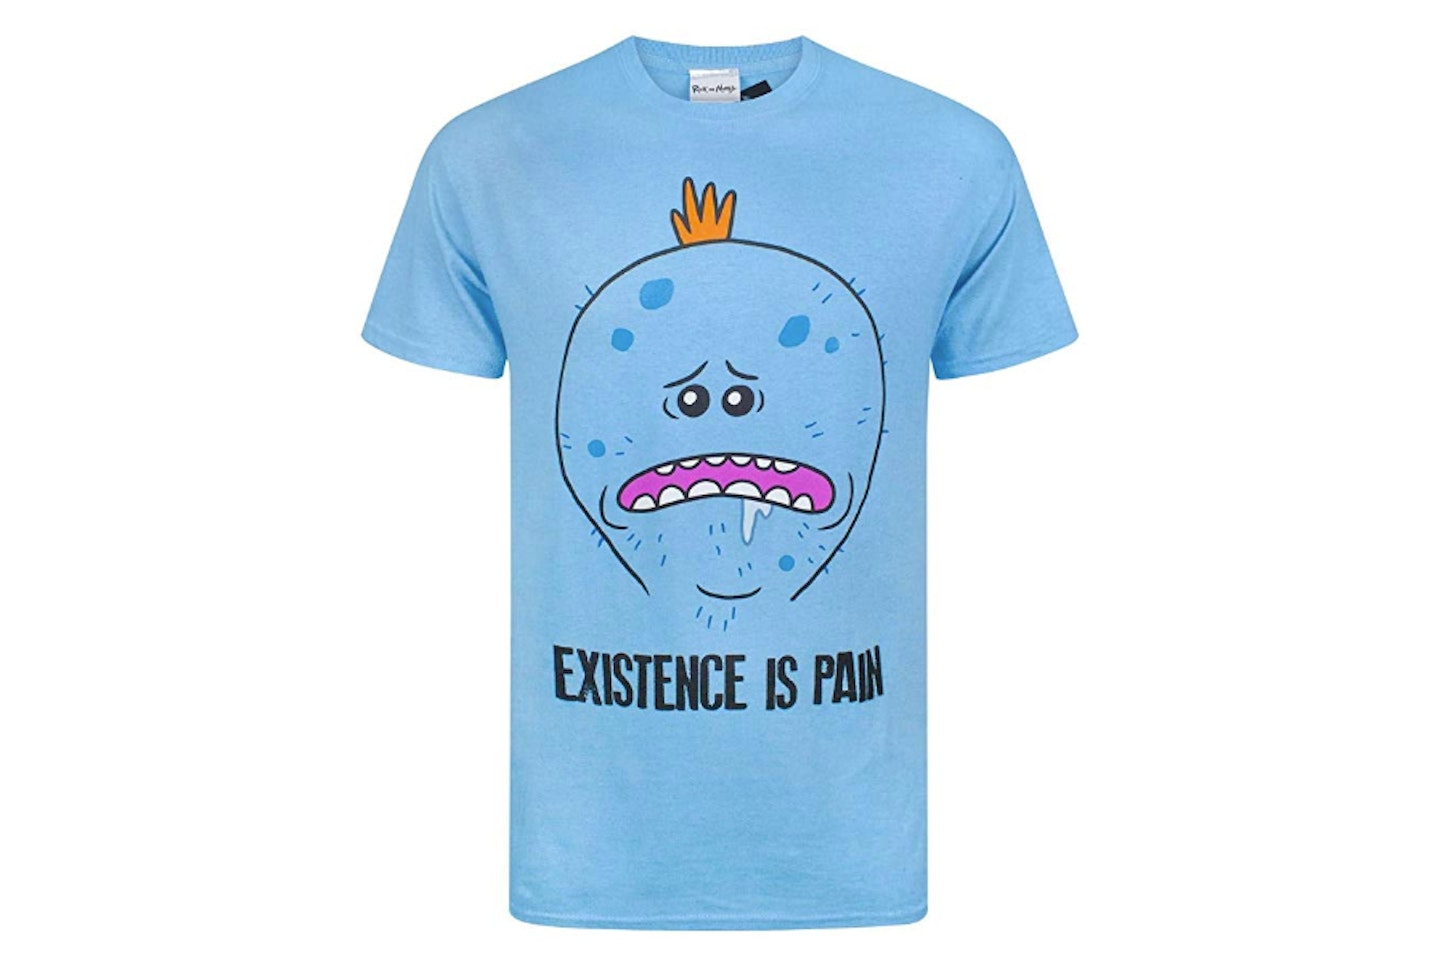 Meeseeks T-Shirt – Existence is Pain, £11.99